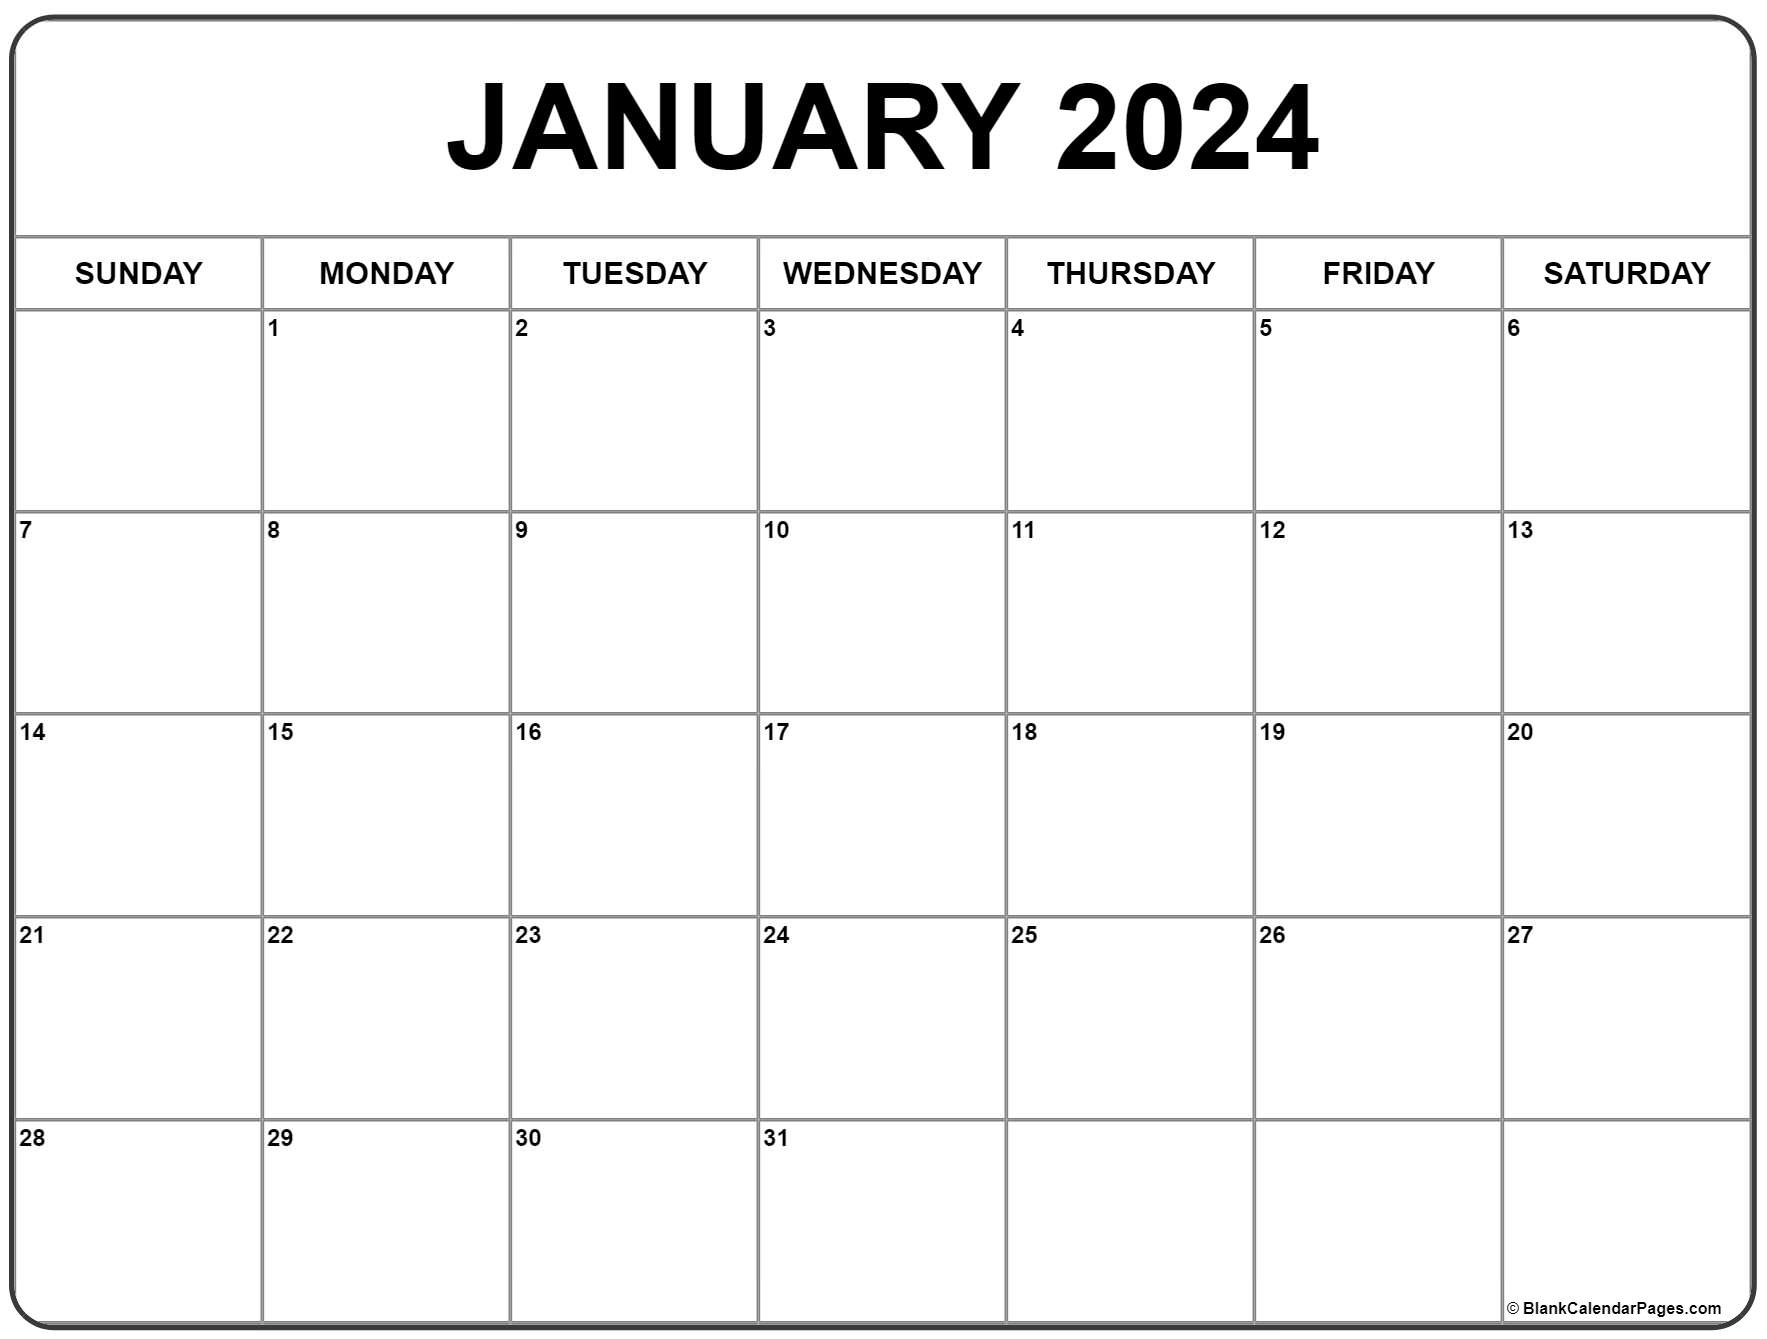 January 2024 Calendar | Free Printable Calendar for Free 2024 Monthly Calendar Printable